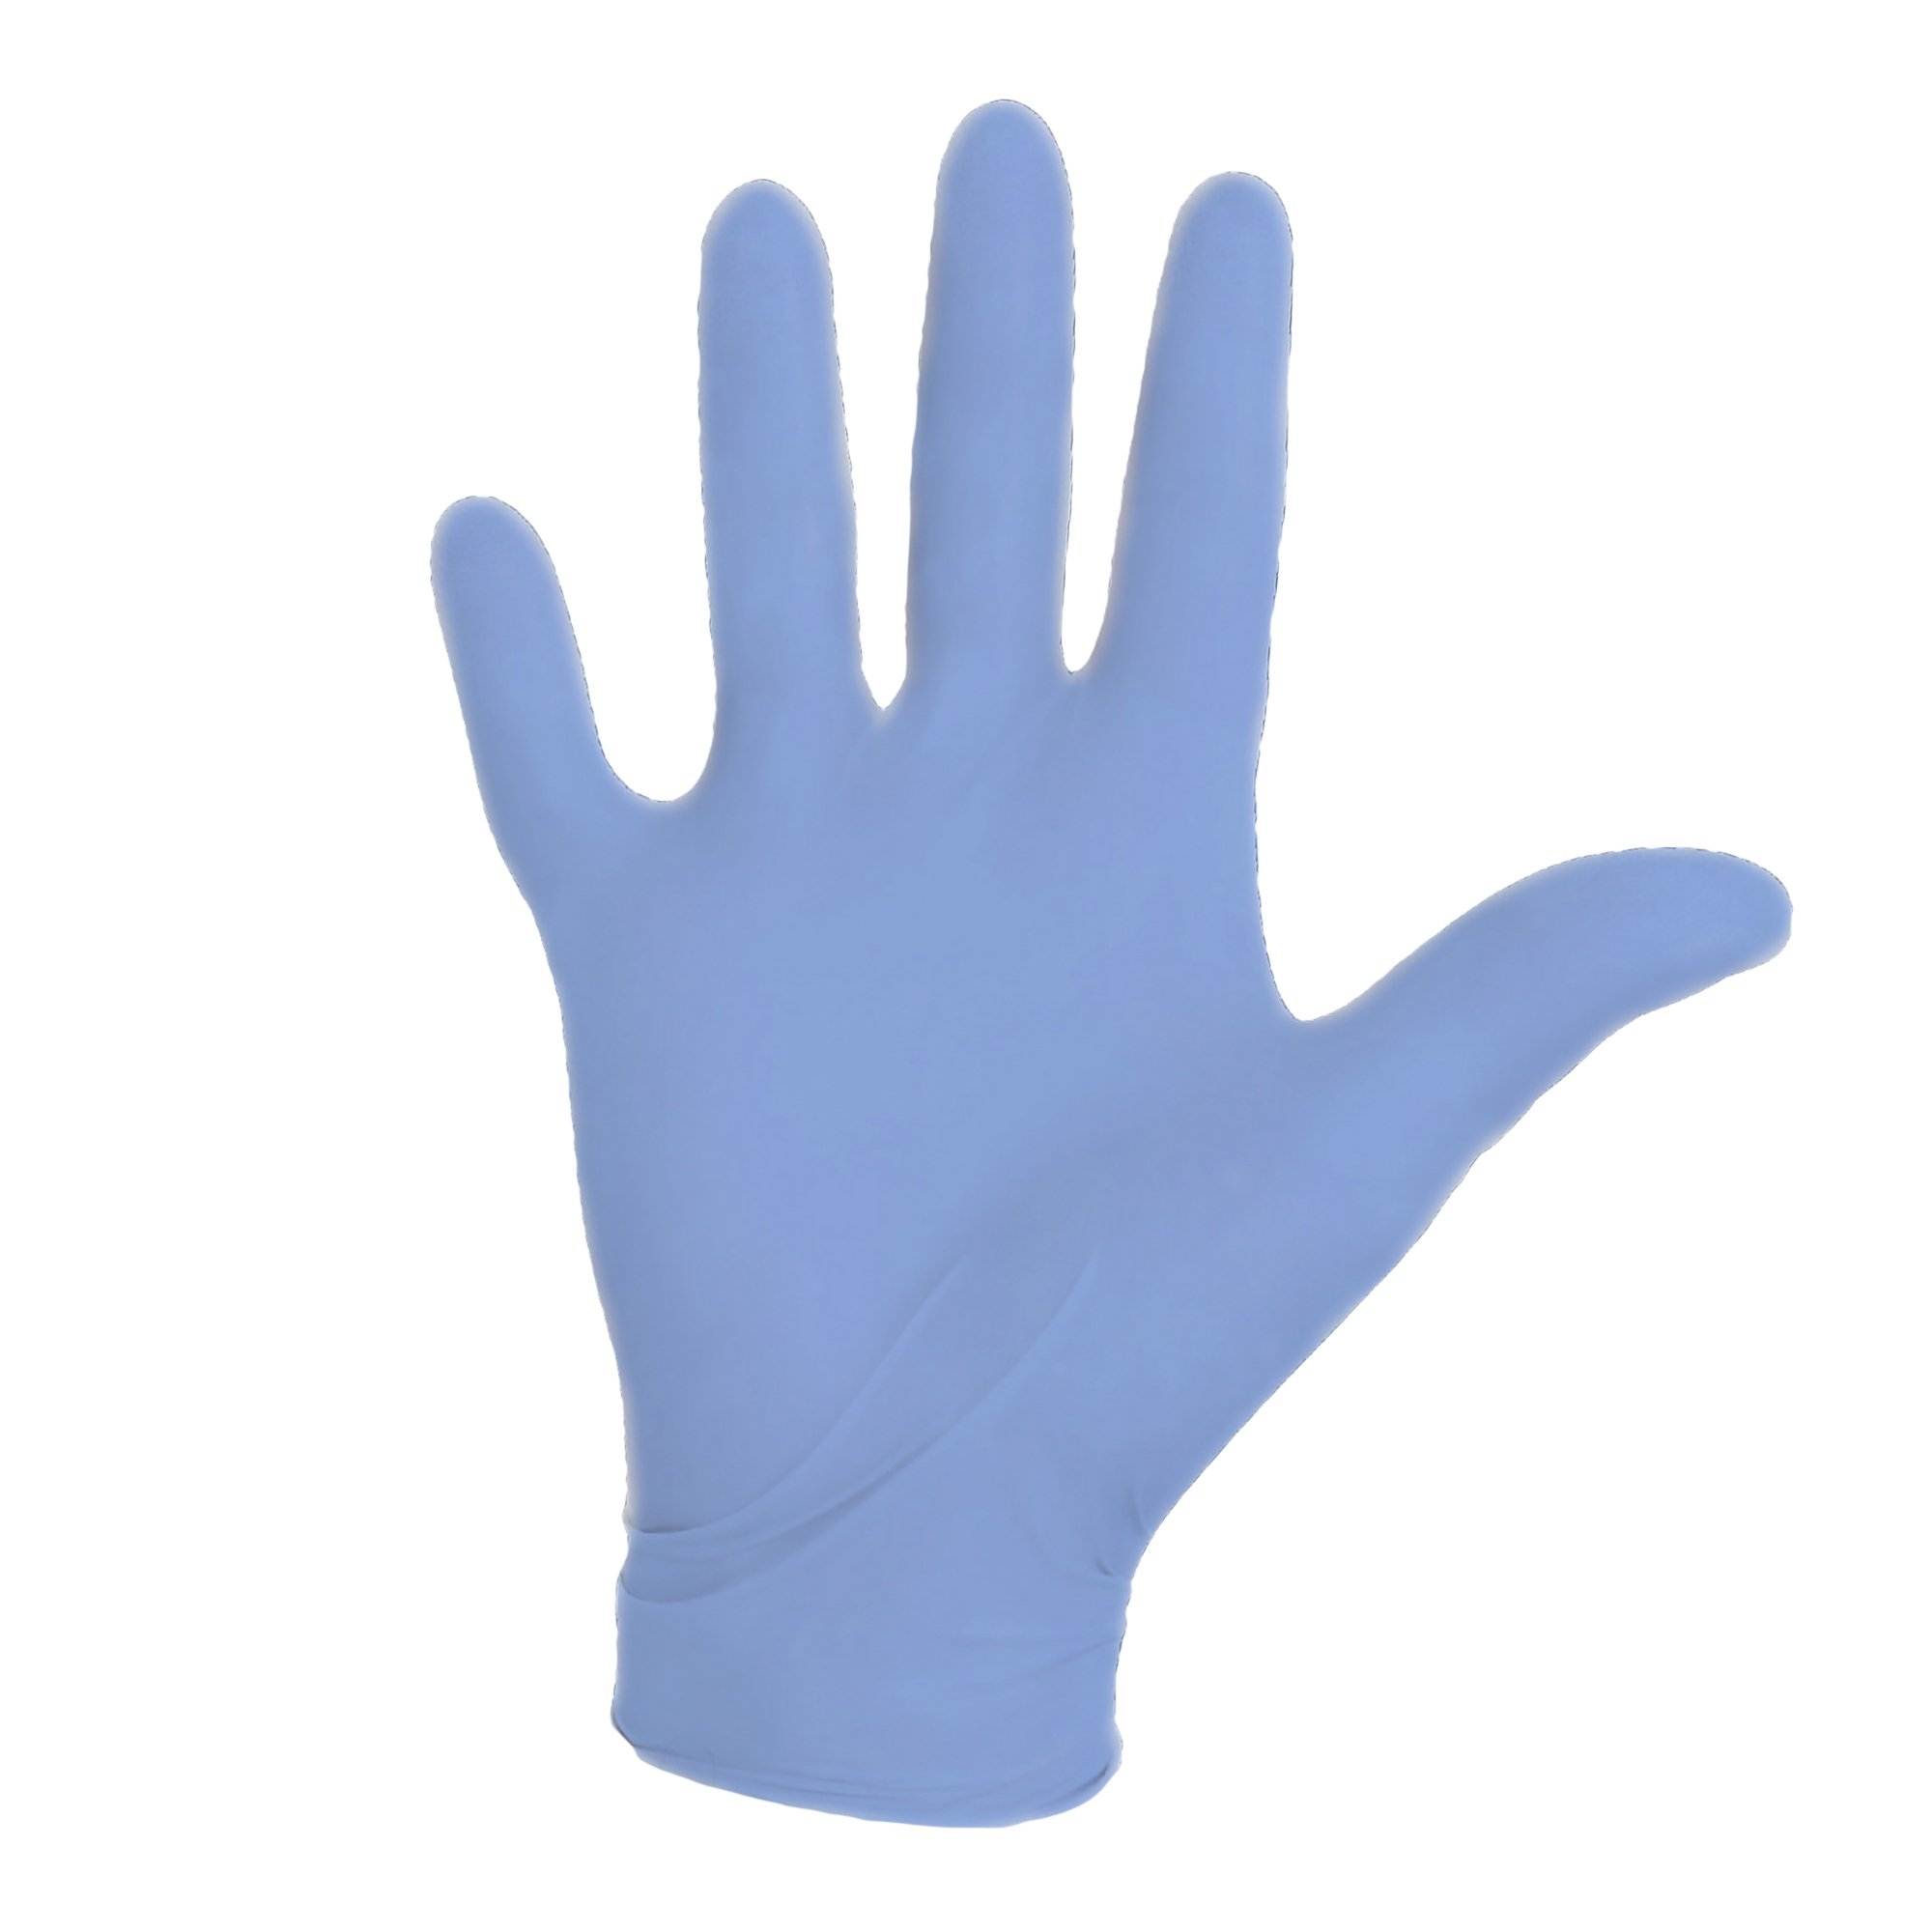 Aquasoft Nitrile Standard Cuff Length Exam Glove, Small, Blue MK 975529